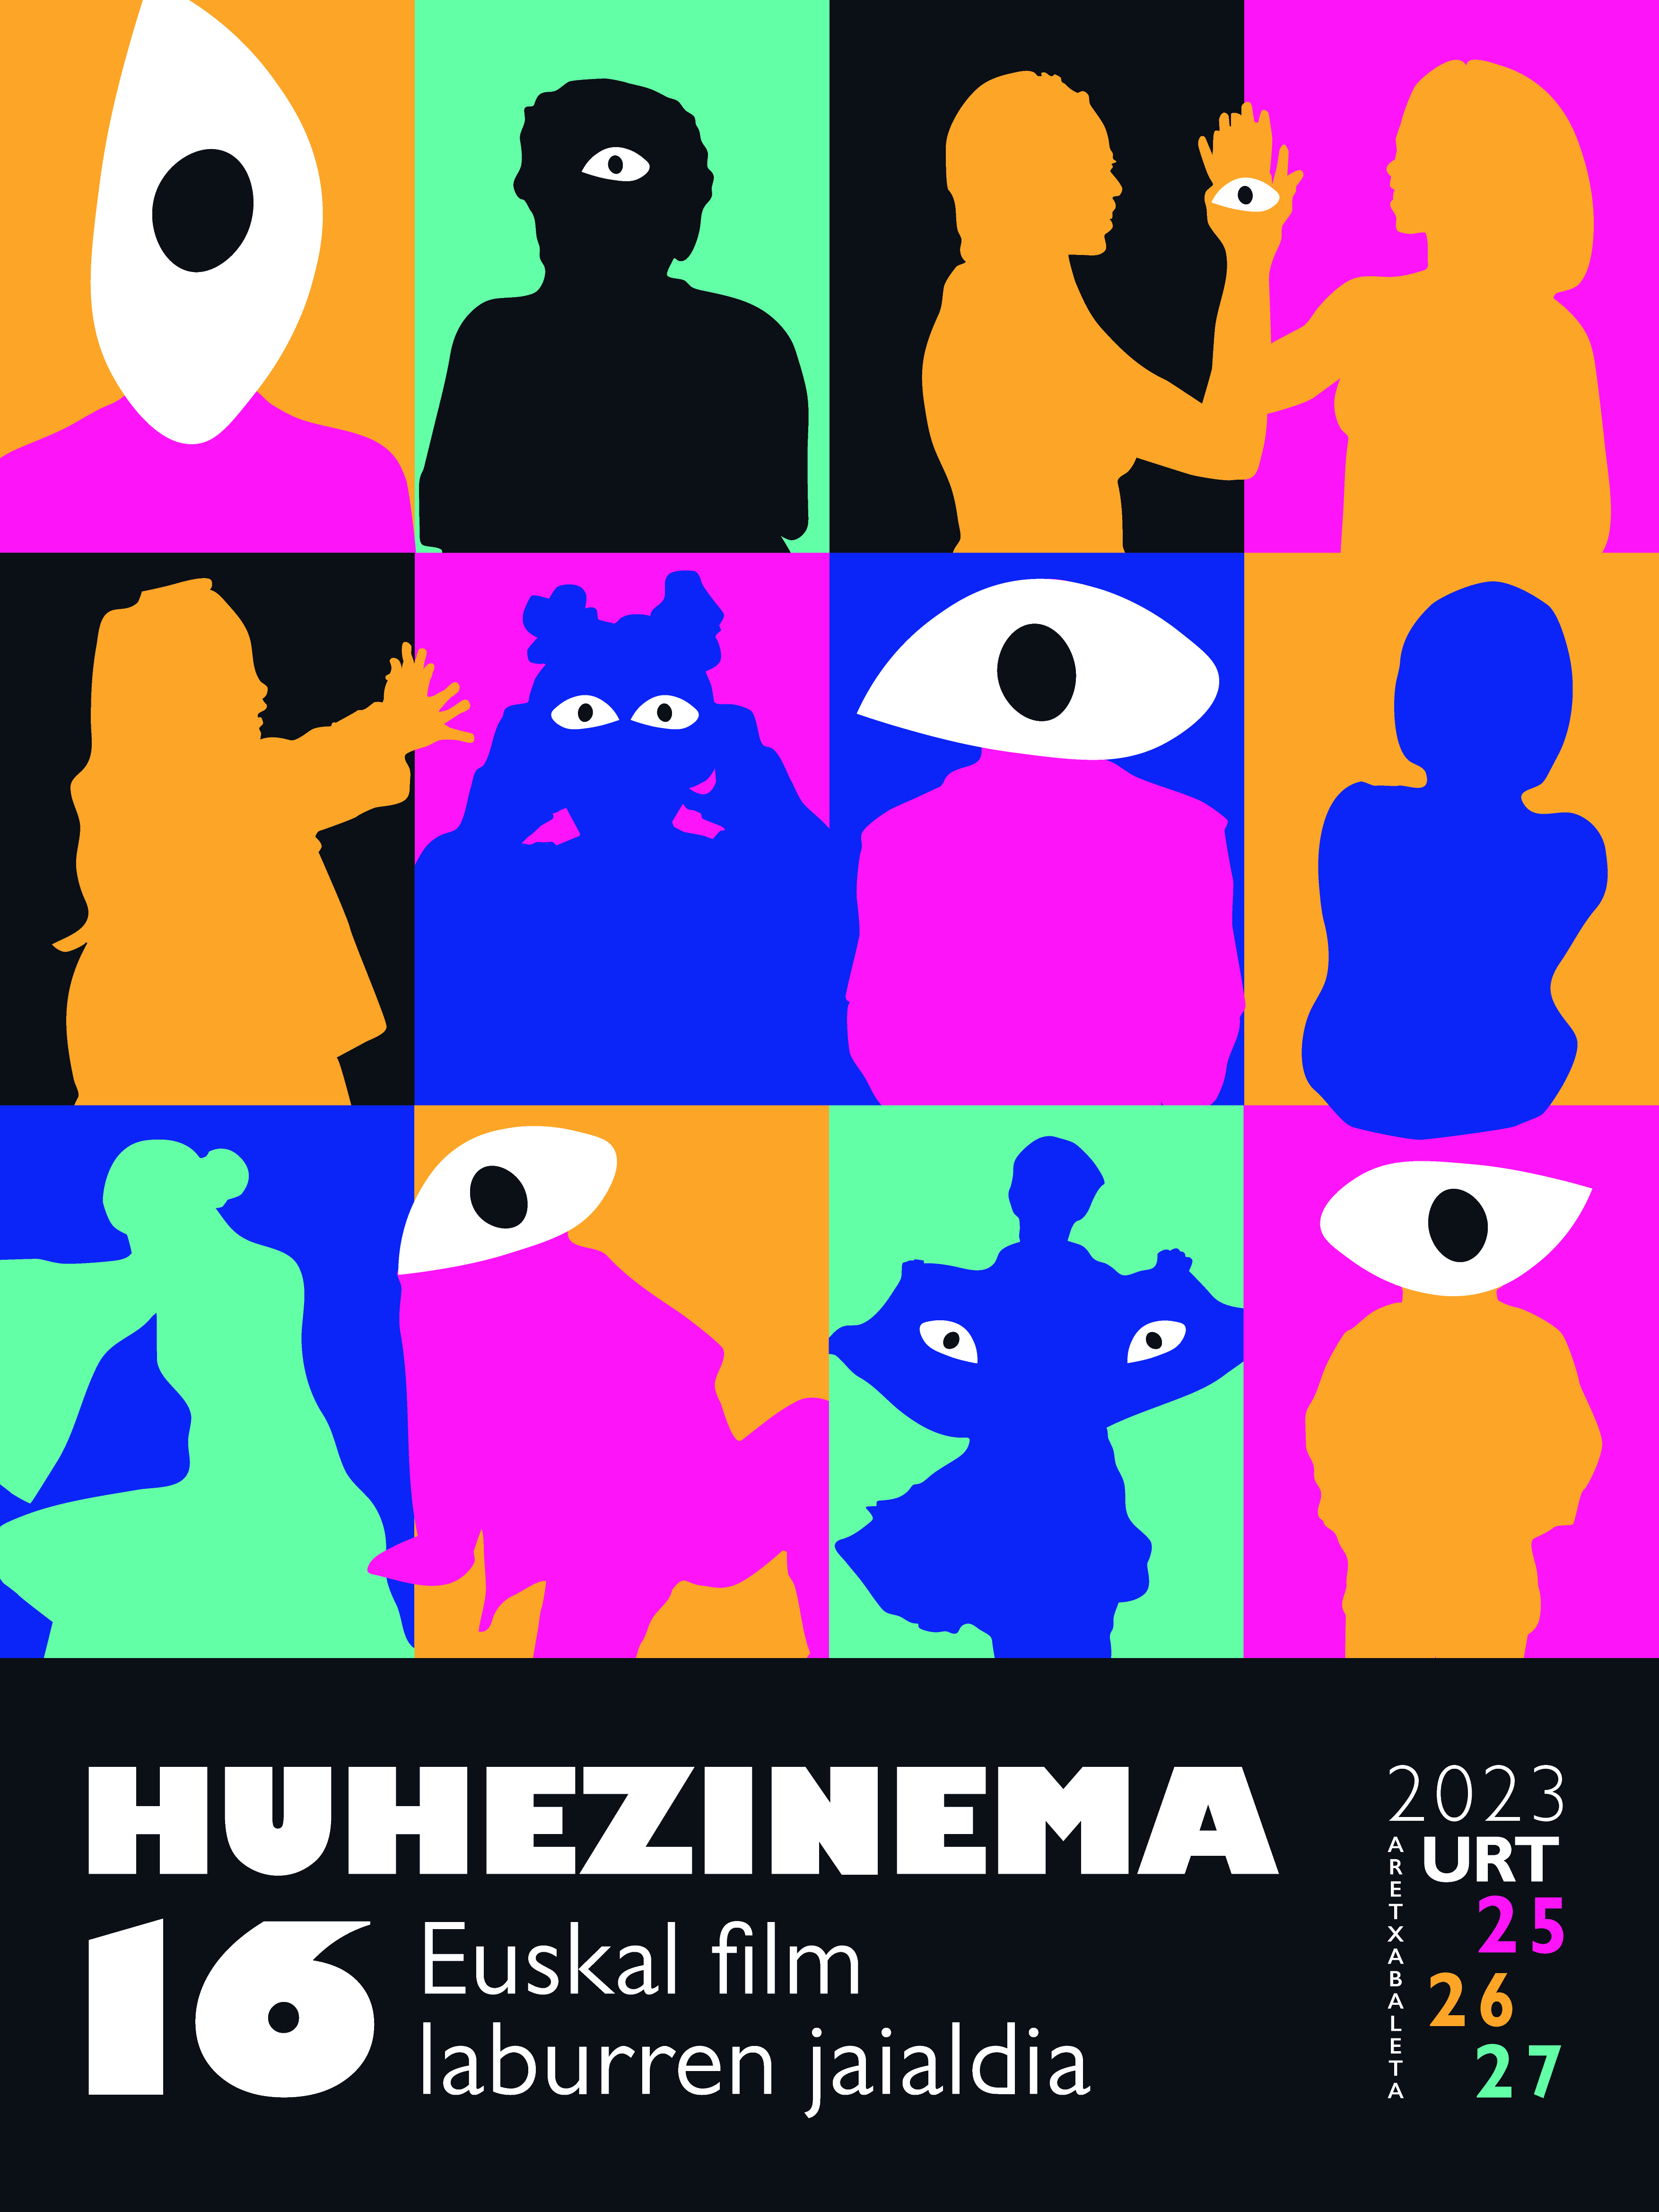 Huhezinema: Festival de cortometrajes vascos